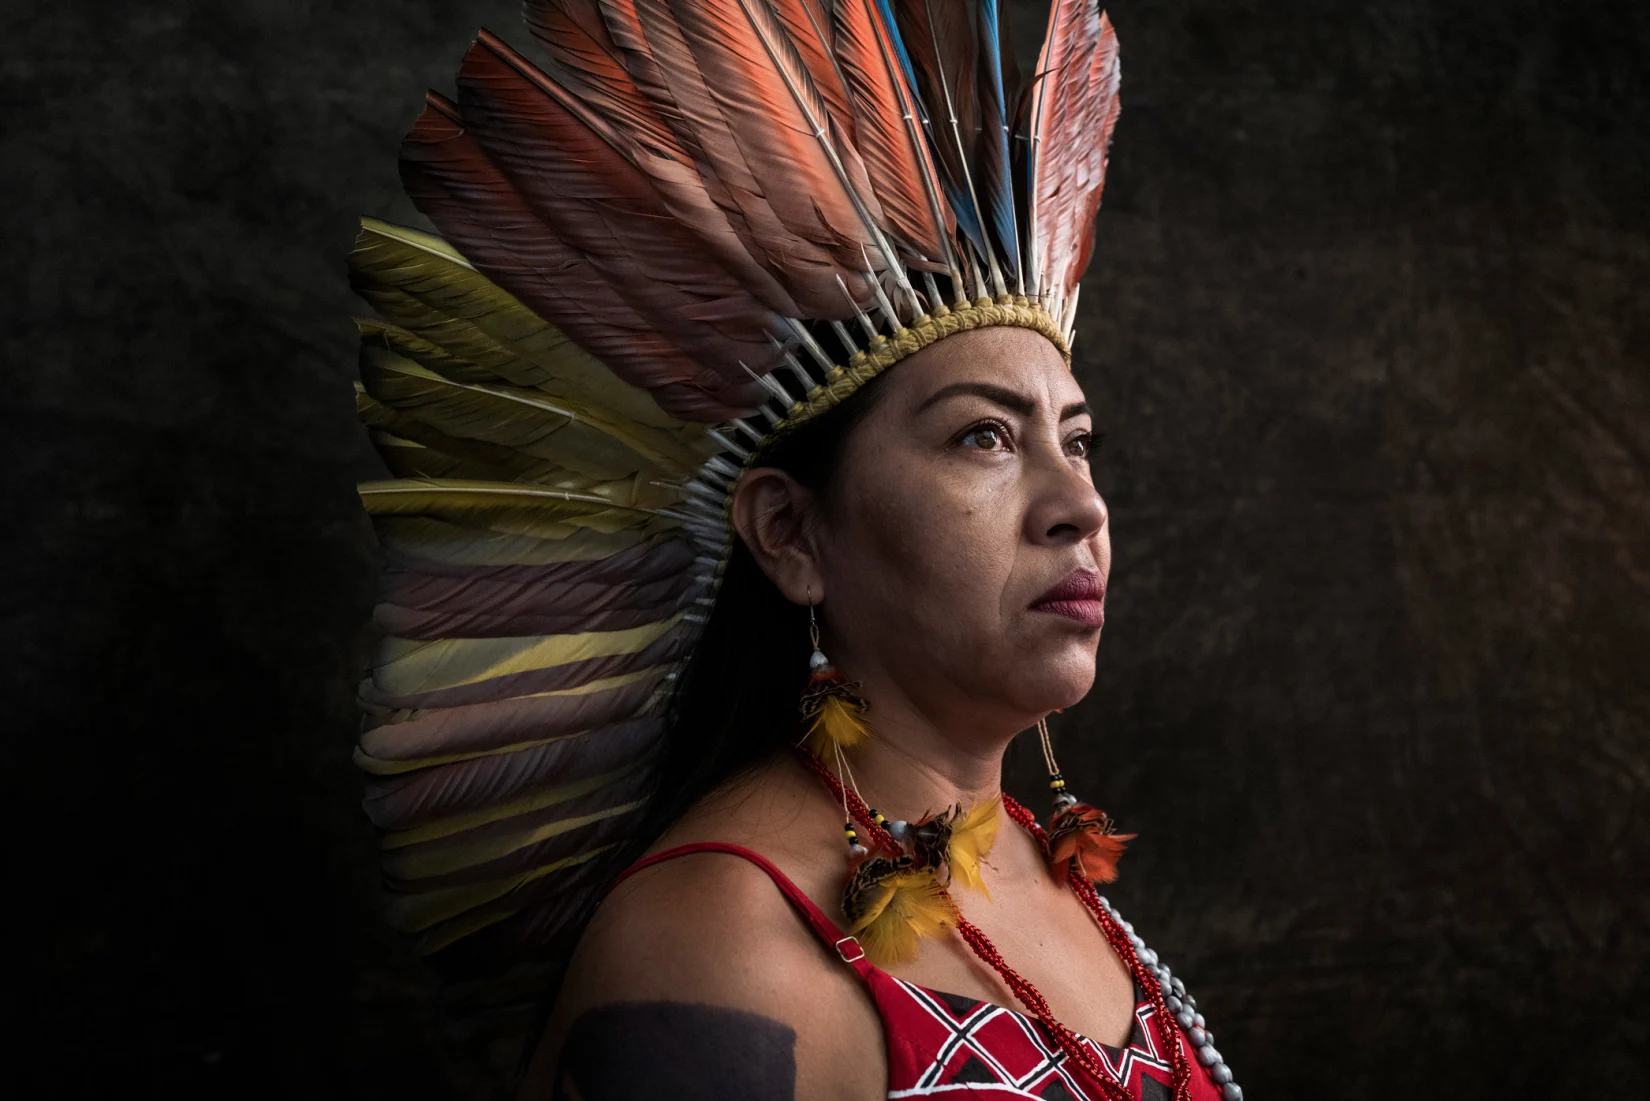 WePresent | Powerful portraits of Brazil’s Indigenous resistance